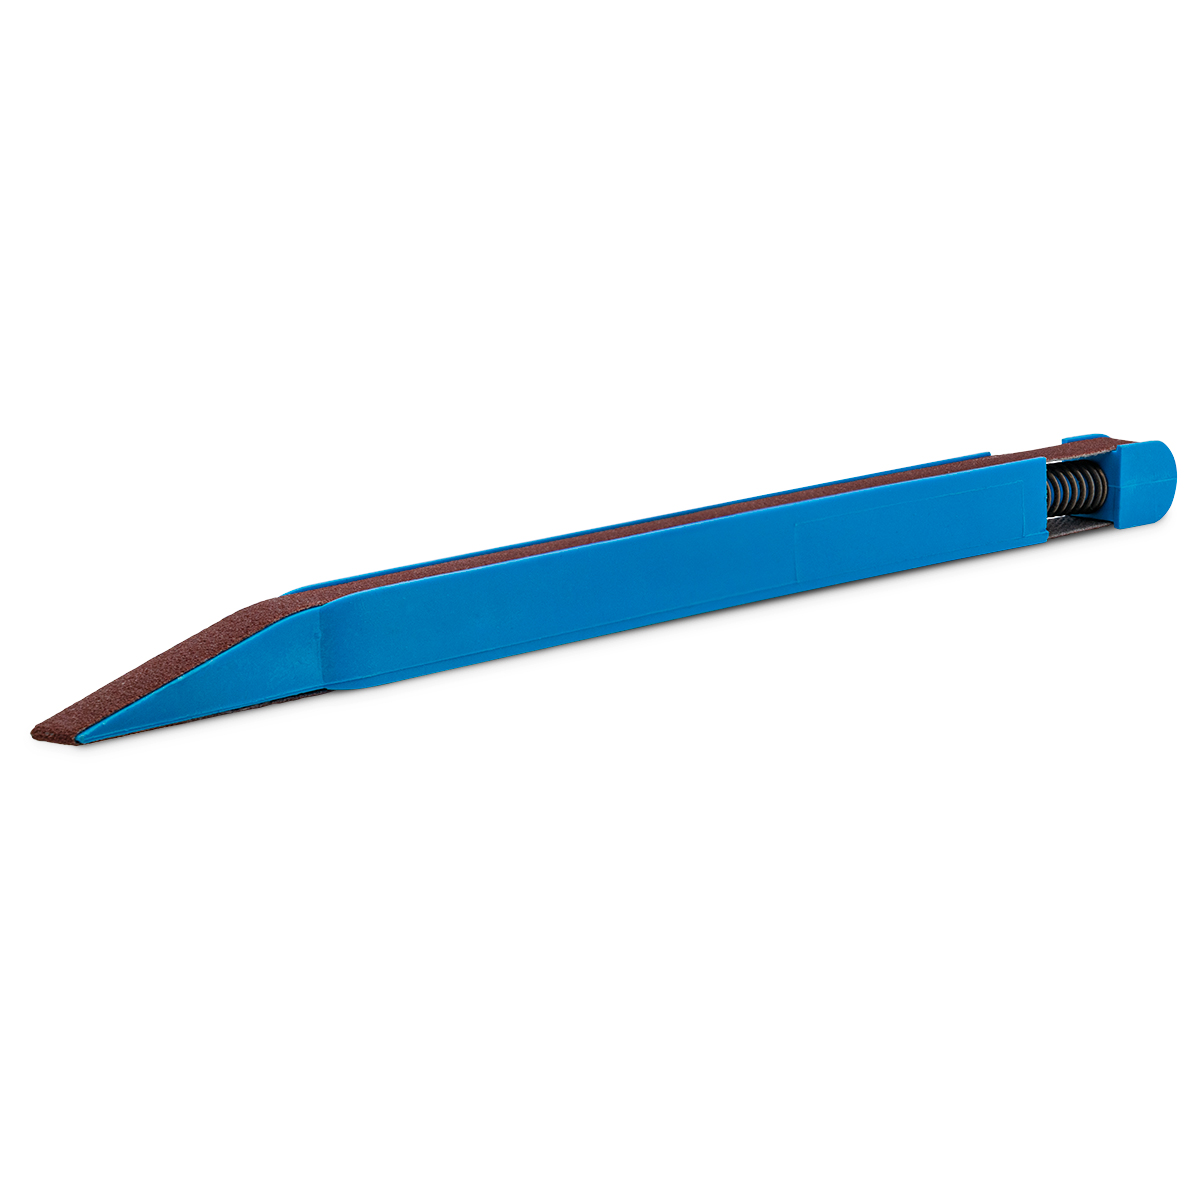 Abrasive stick, grain 240, blue, for abrasive belts of 7 x 330 mm